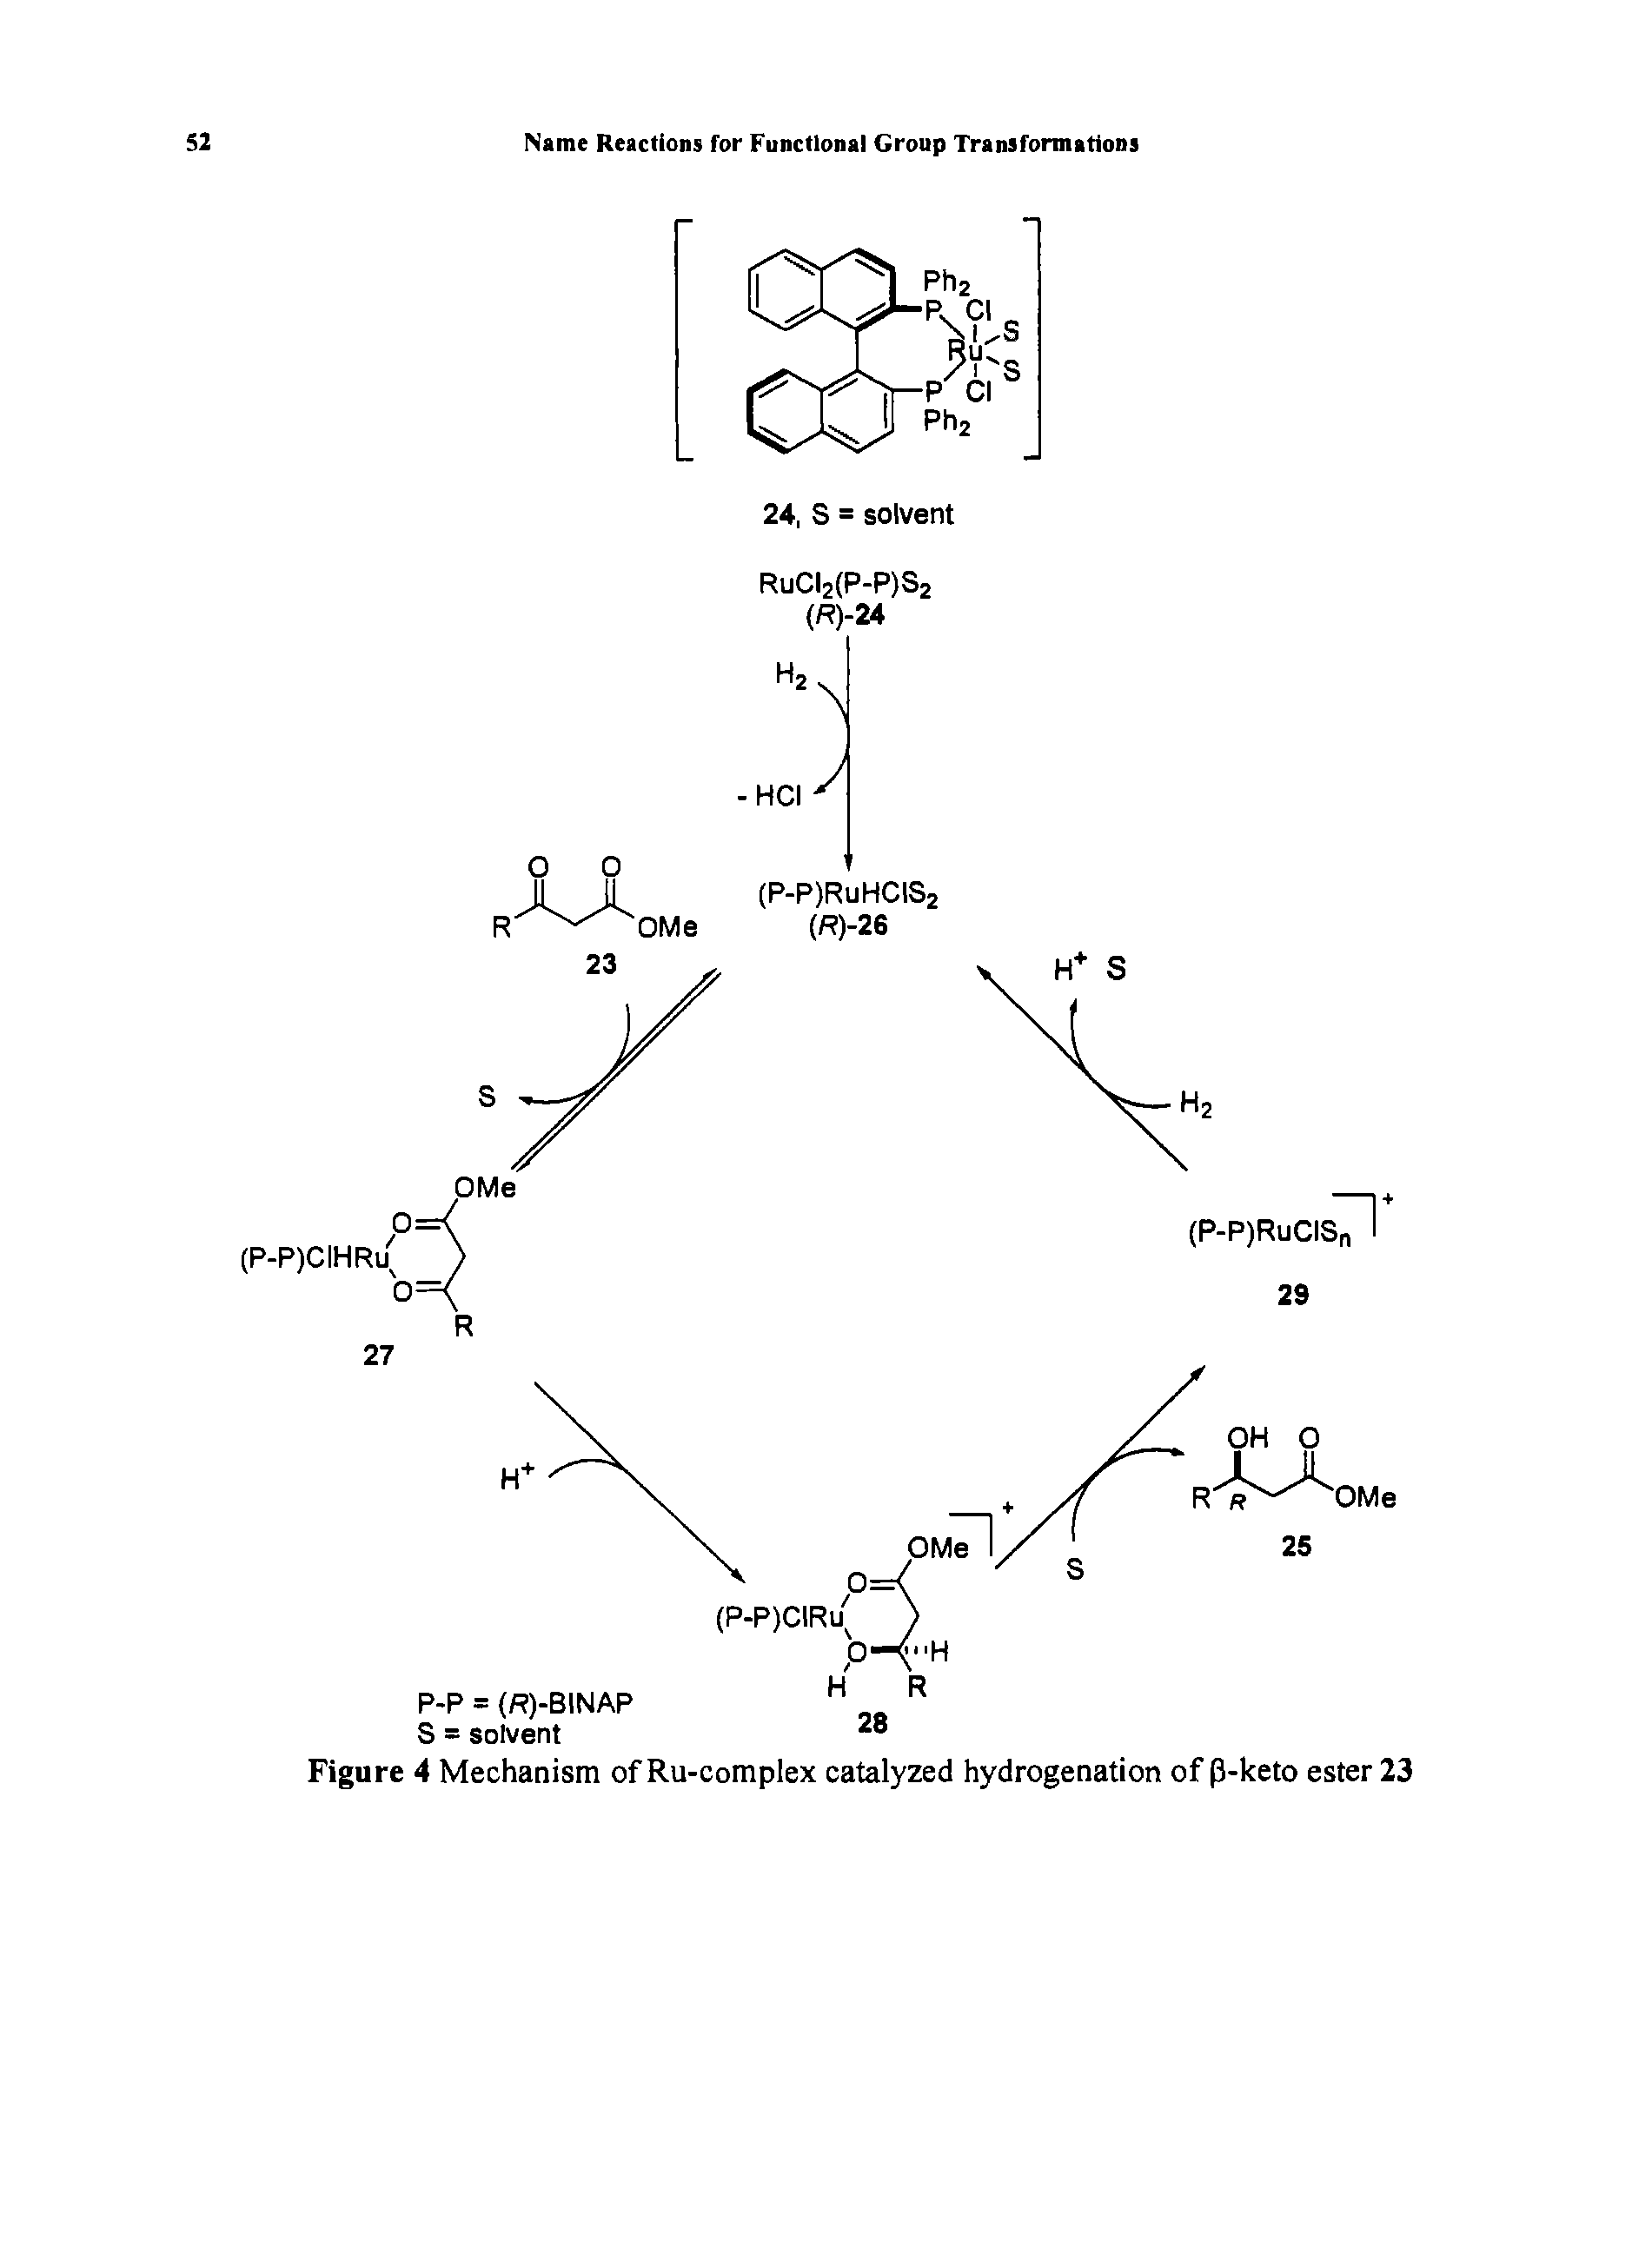 Figure 4 Mechanism ofRu-complex catalyzed hydrogenation of P-keto ester 23...